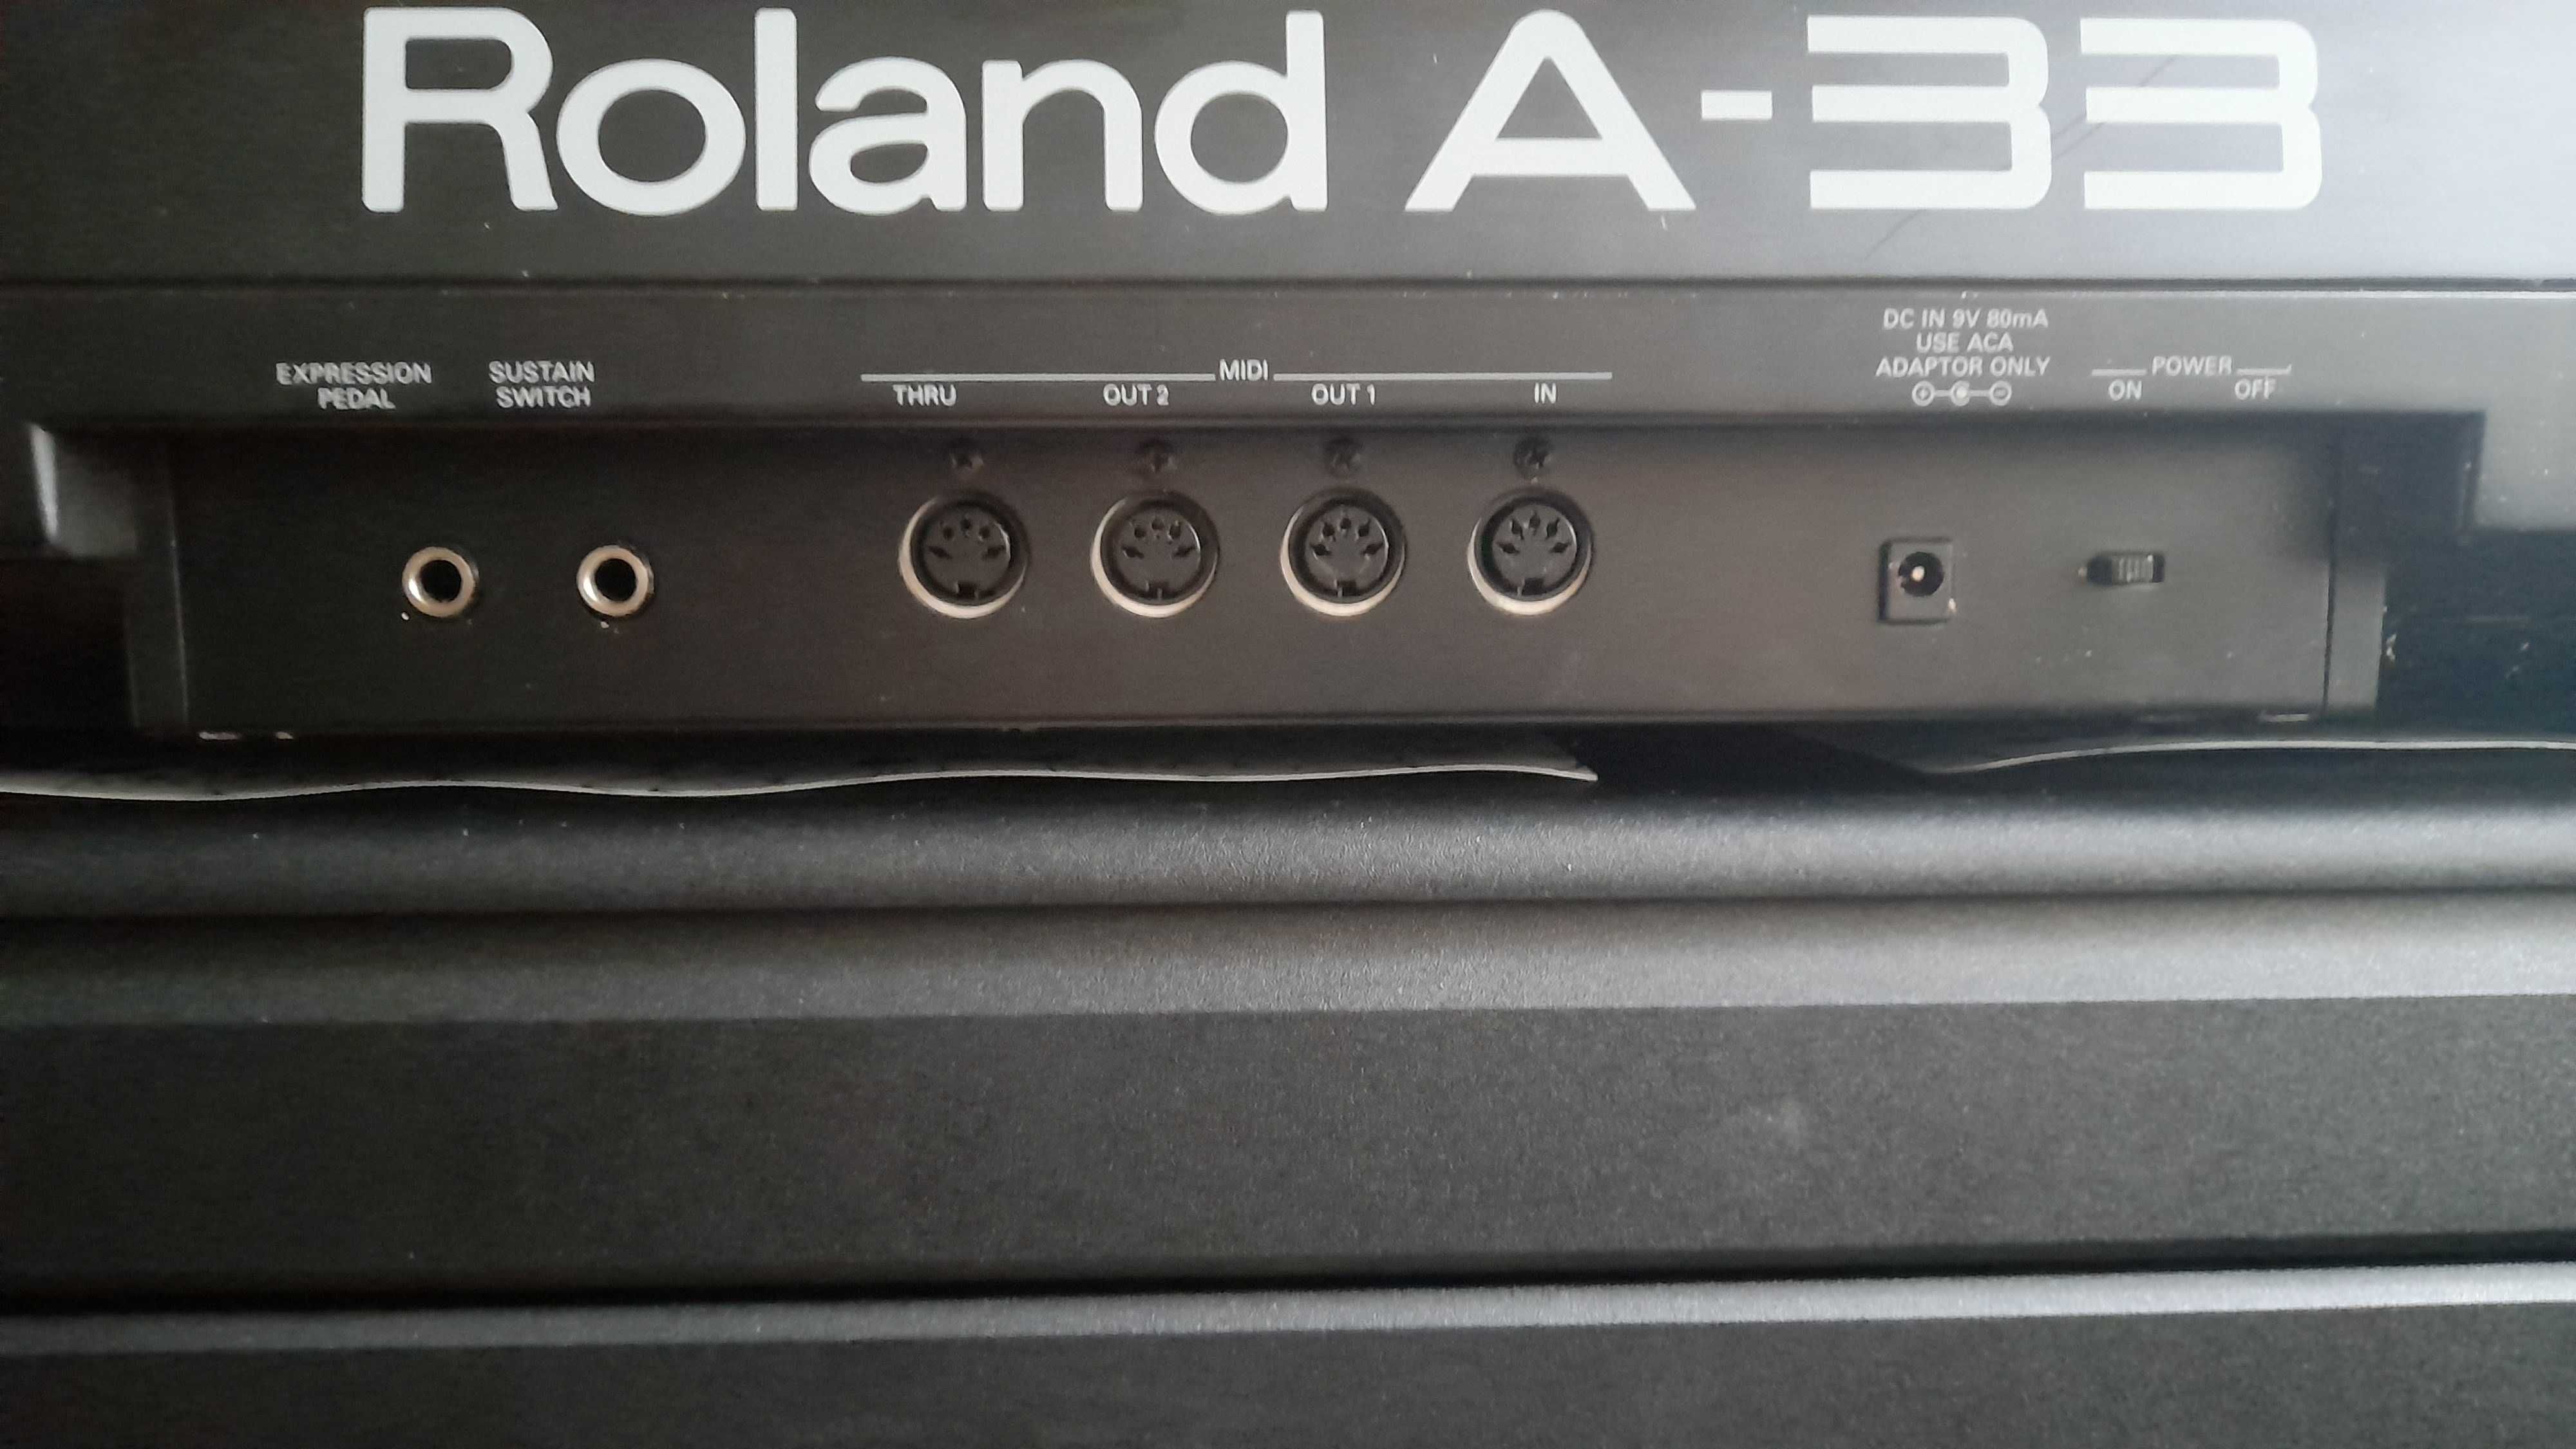 Klawiatura MIDI Roland A-33